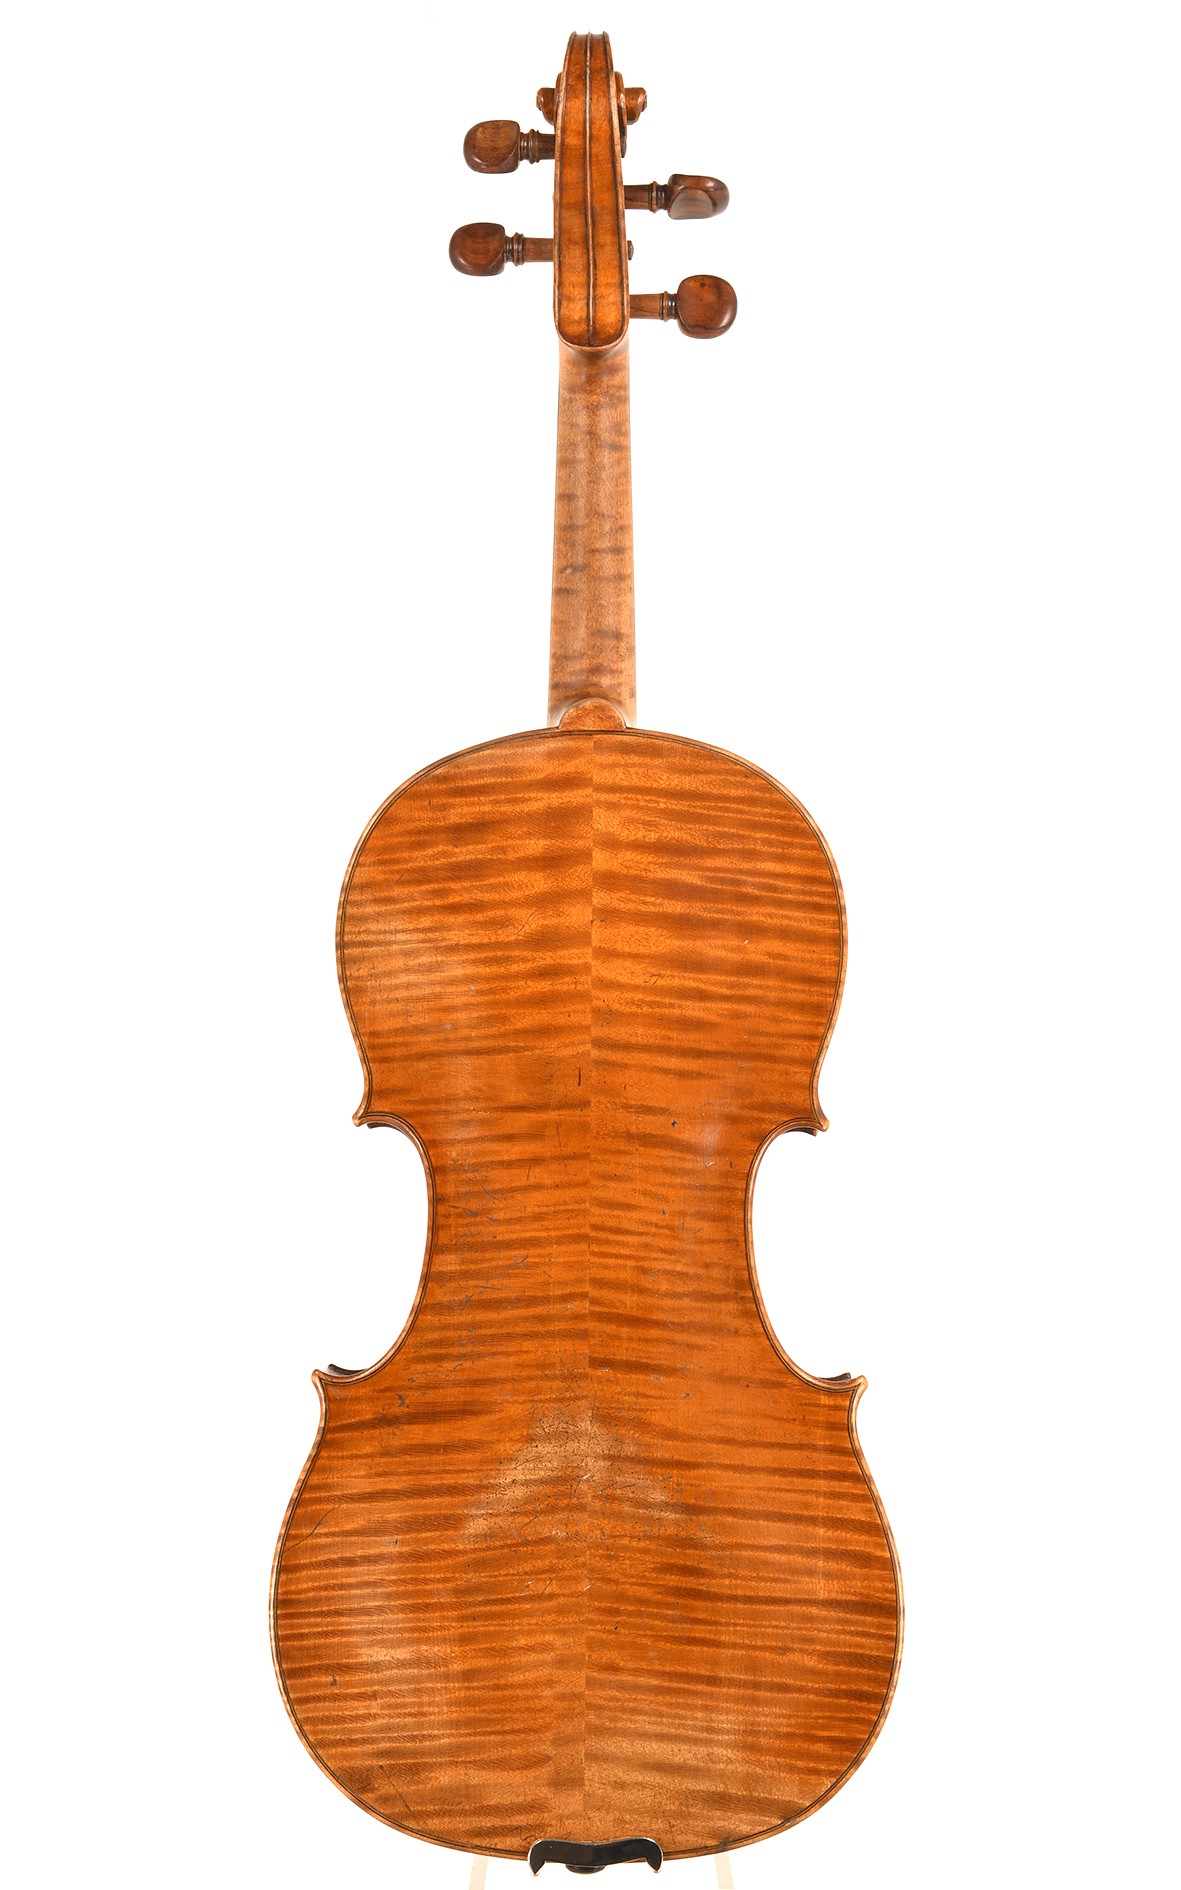 Fine old Saxon violin c.1860 - probably Martin family - outstanding!